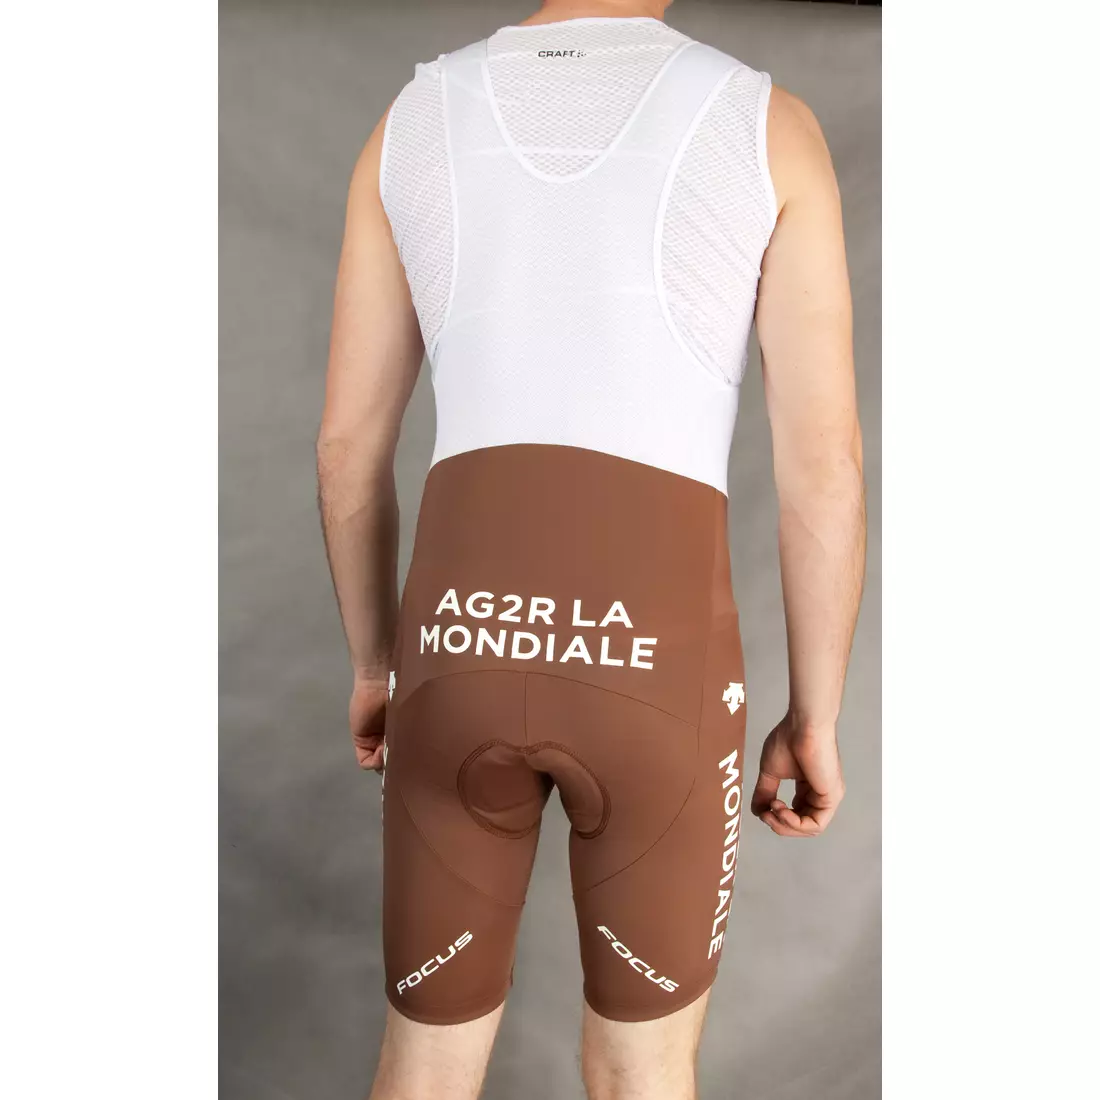 AG2R 2015 cycling shorts